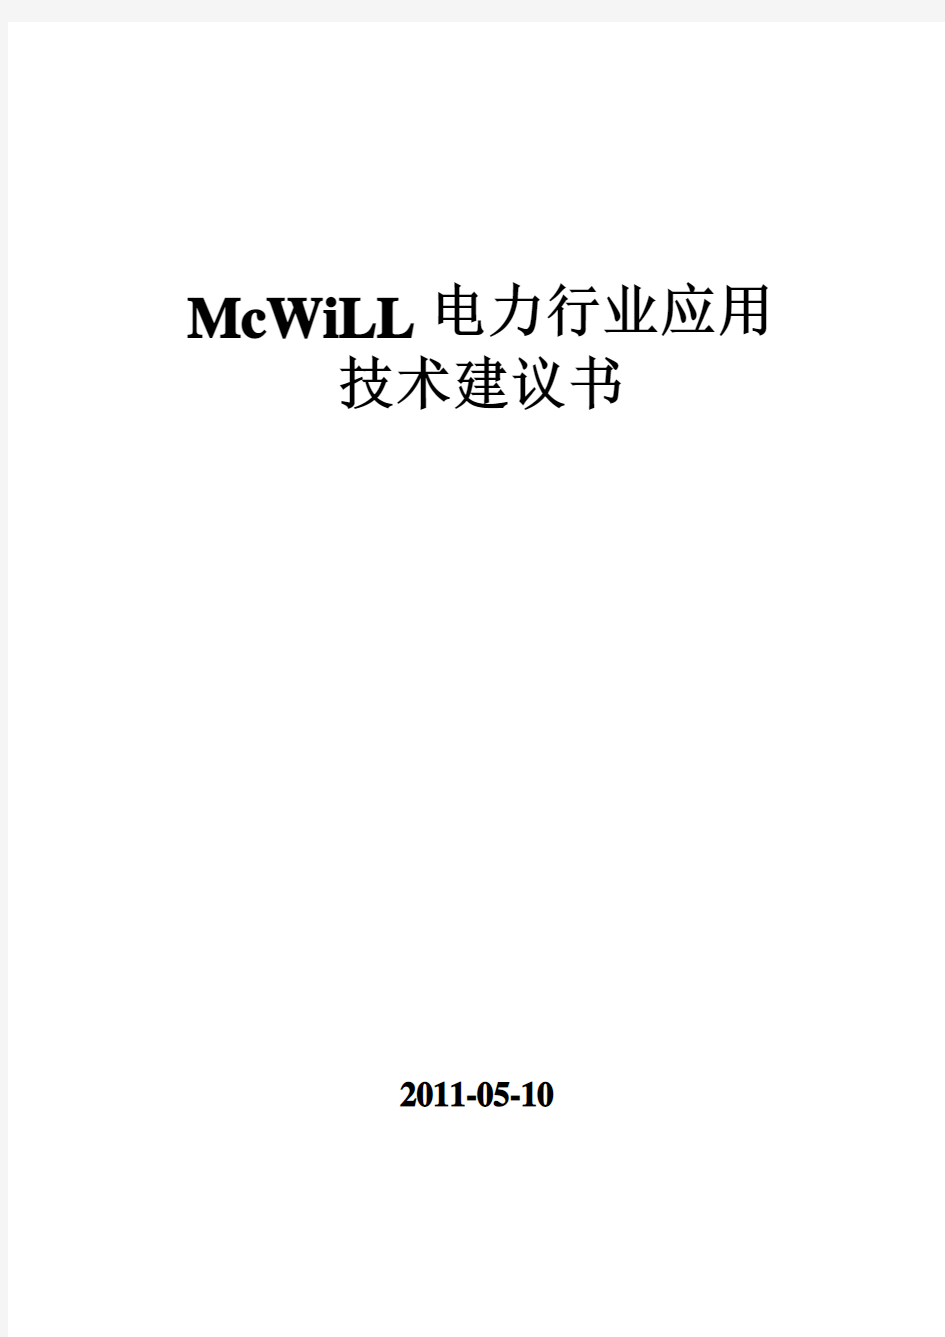 McWiLL在电力系统应用技术建议书